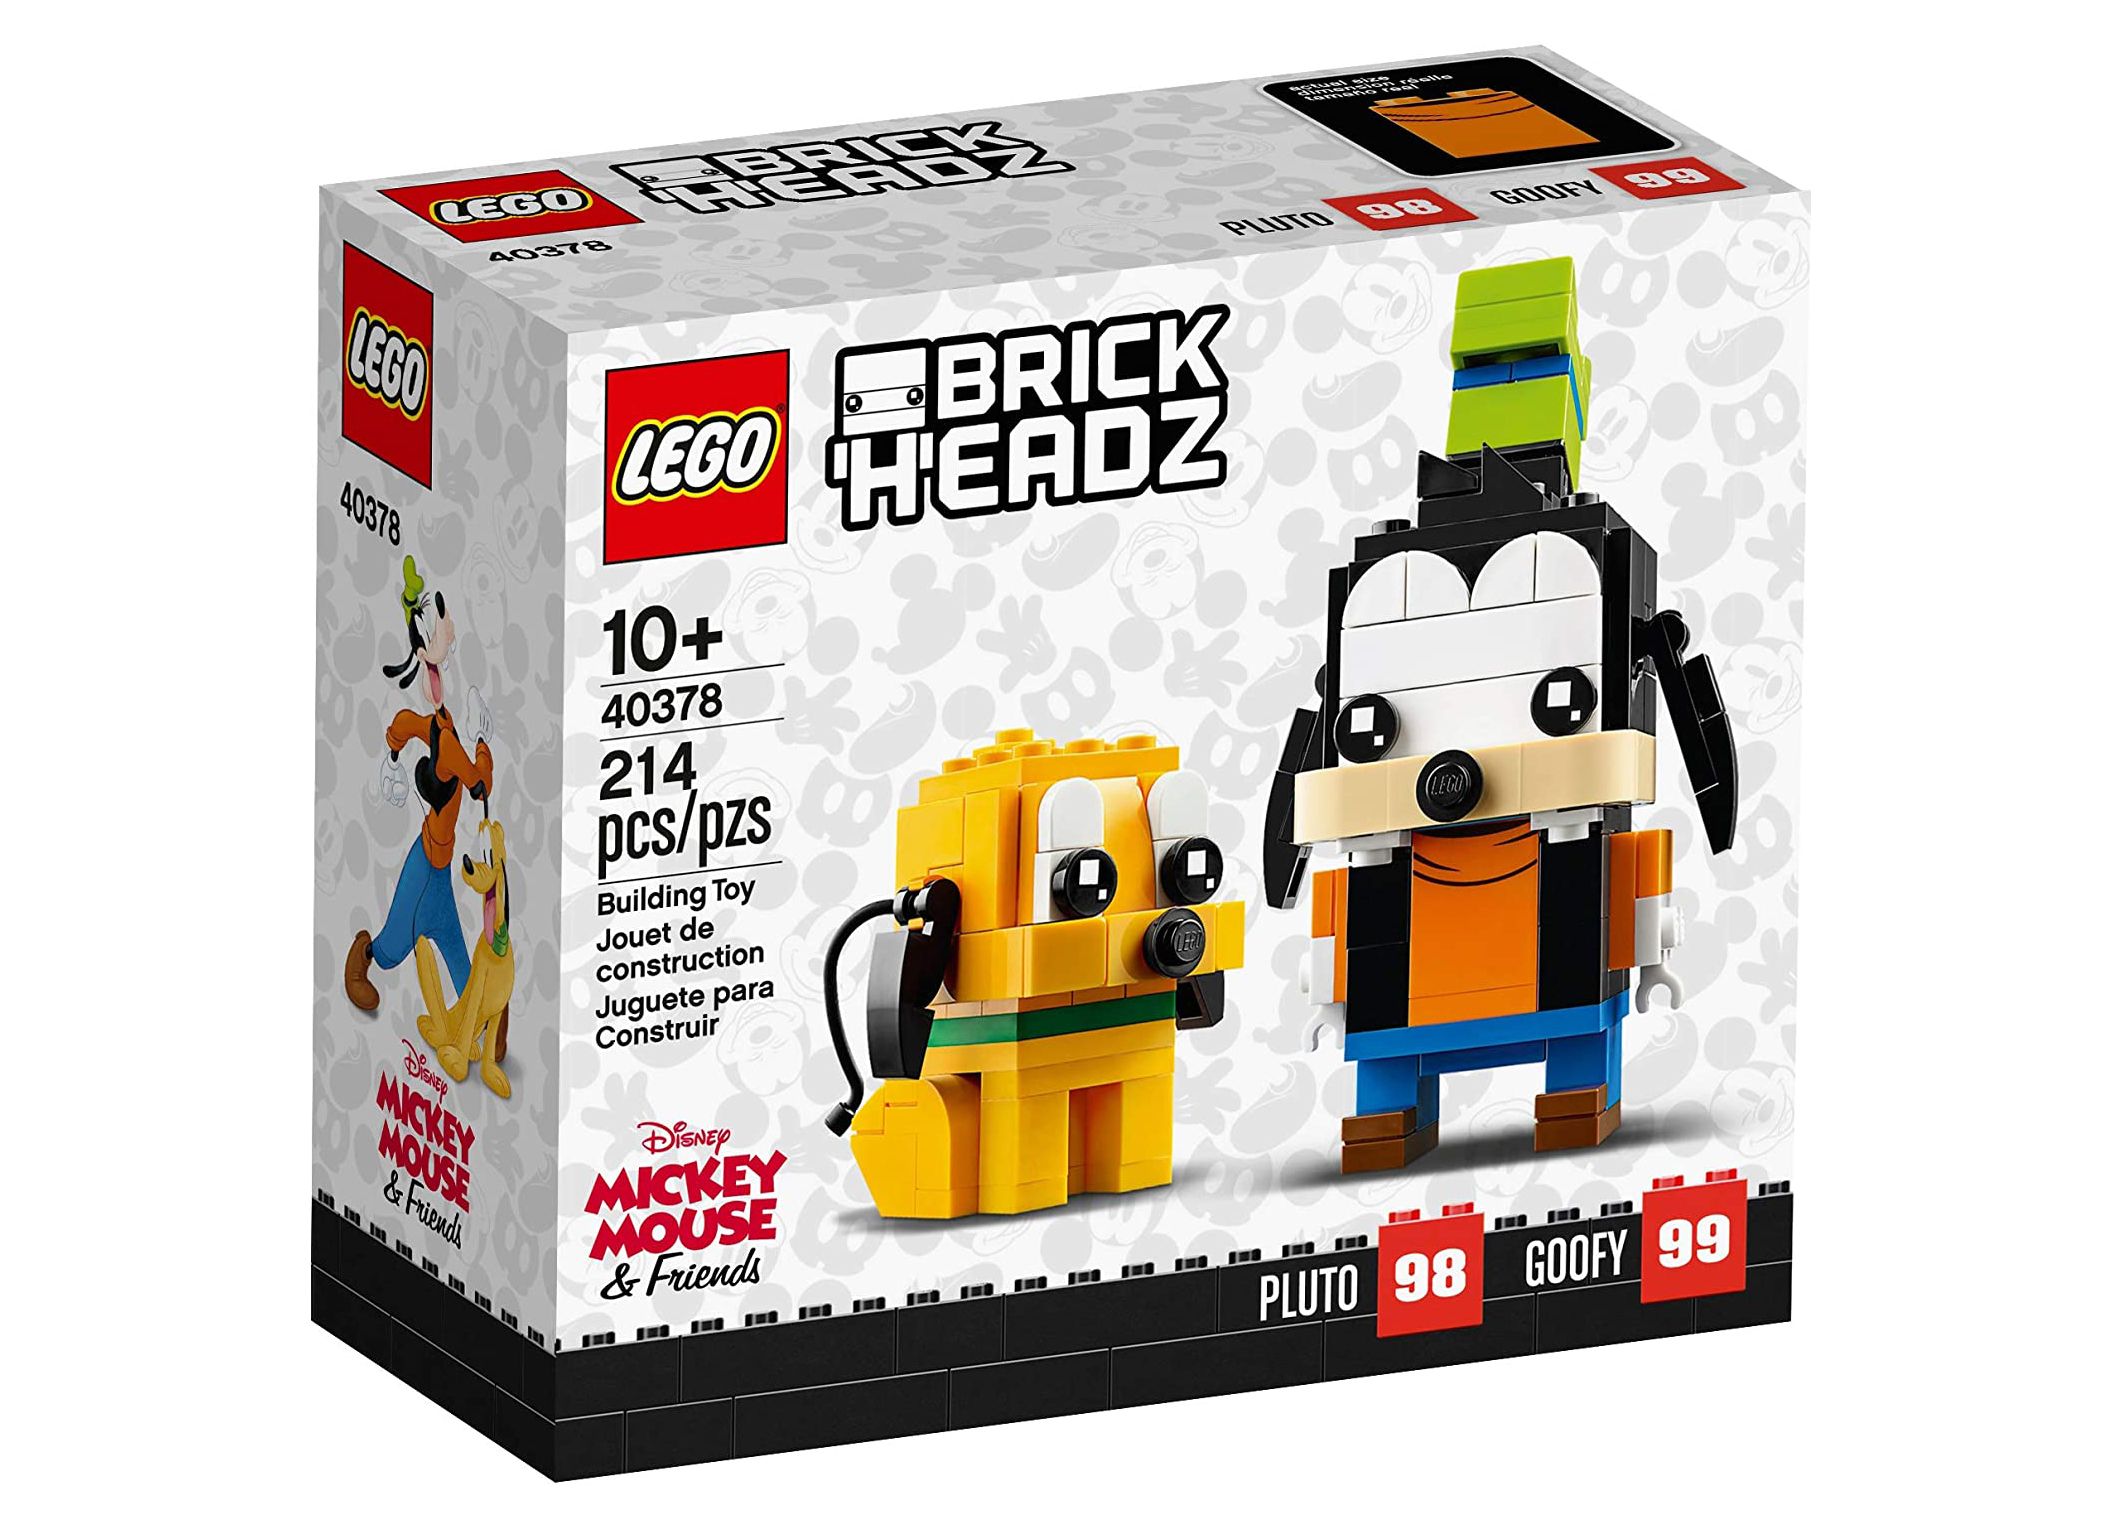 LEGO Brick Headz Disney Mickey Mouse Set 41624 - US